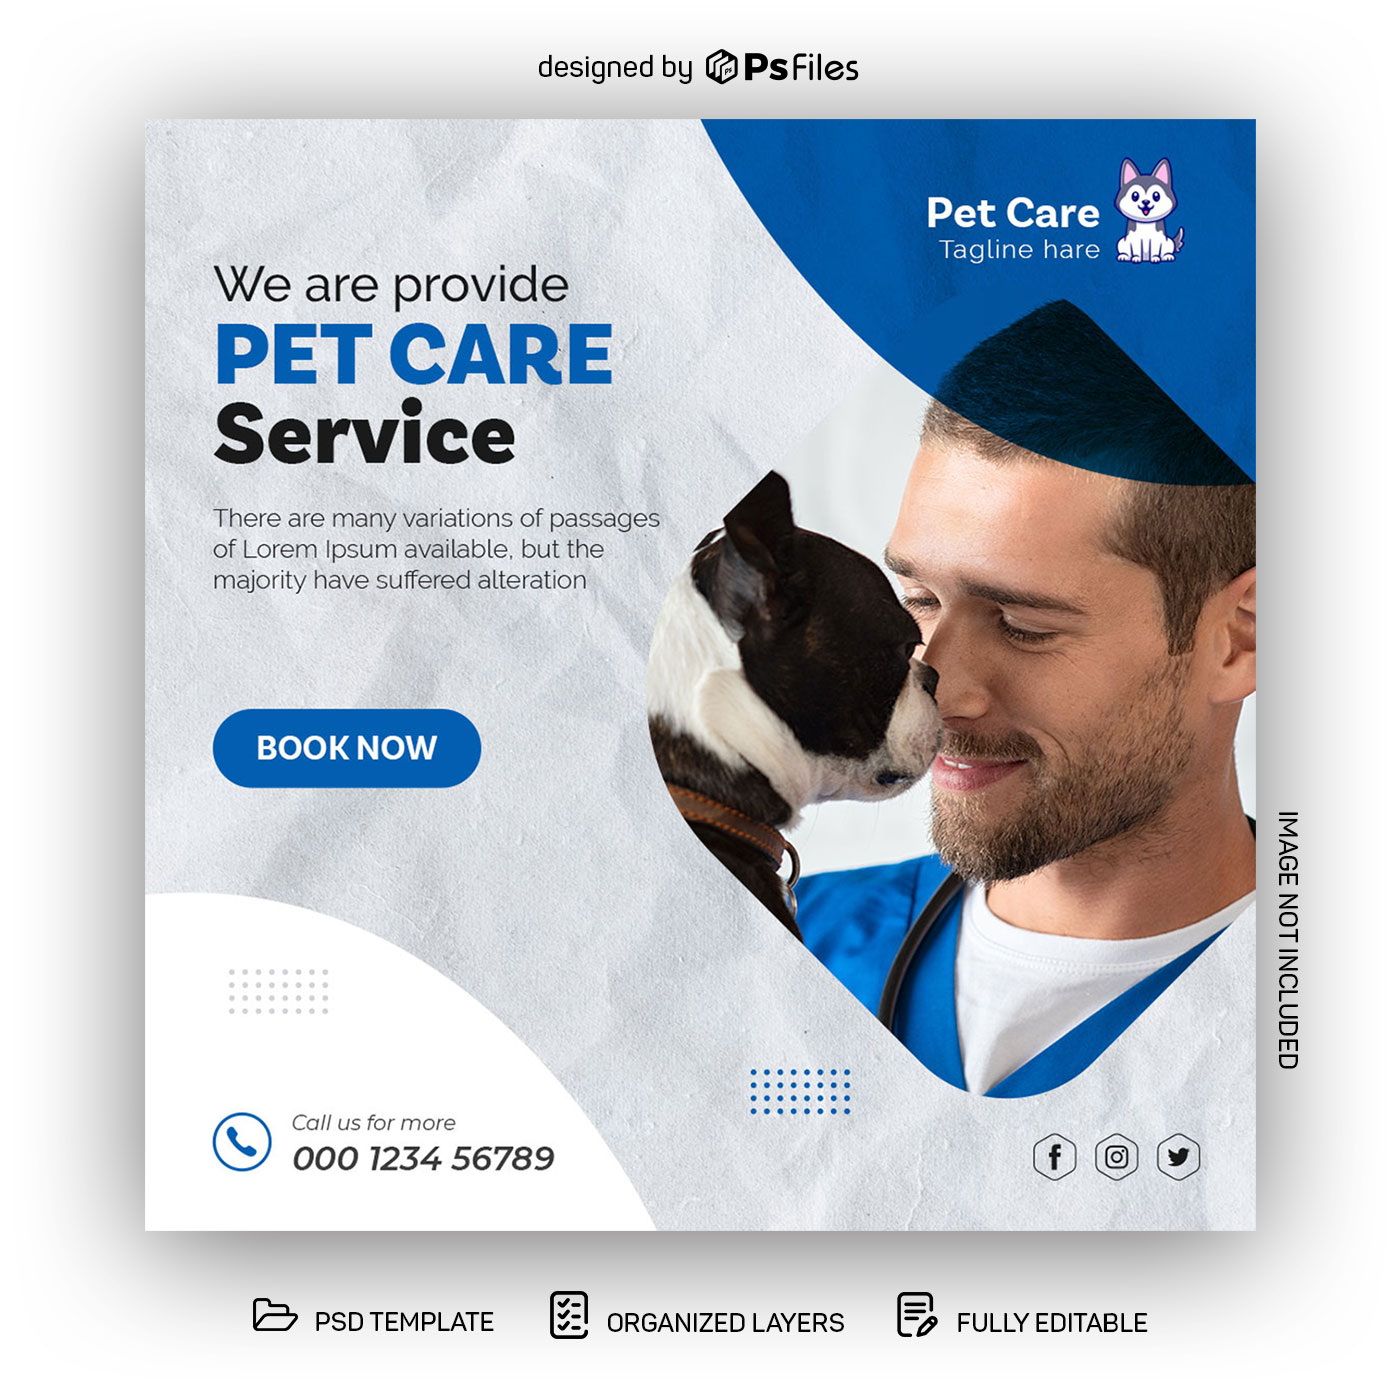 Instagram Post Design PSD template for Per Care Service Shops